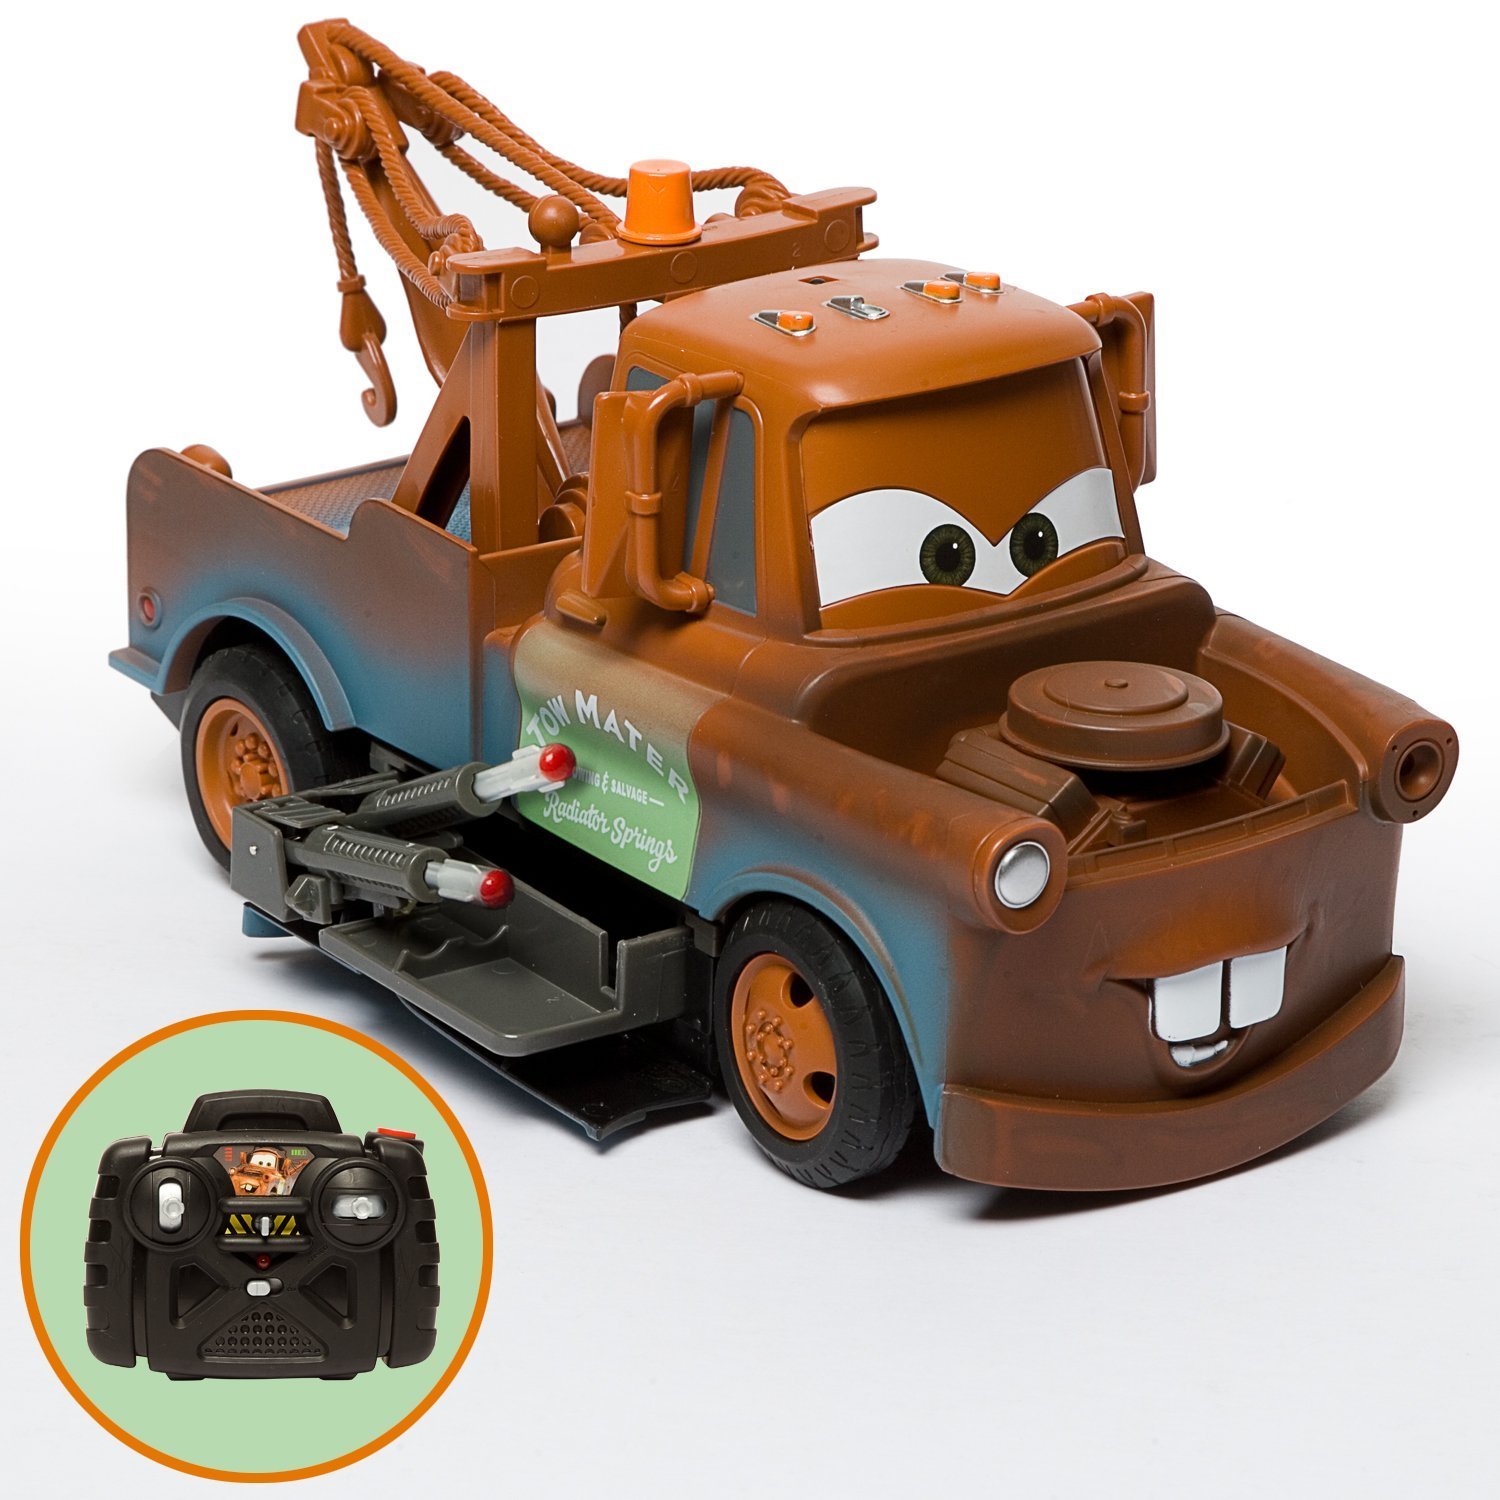 Игры мэтр тачки. Тачки 2 Мэтр. Tow Mater игрушки. Машинка Дисней Tow Mater. Эвакуатор Мэтр Тачки 2.